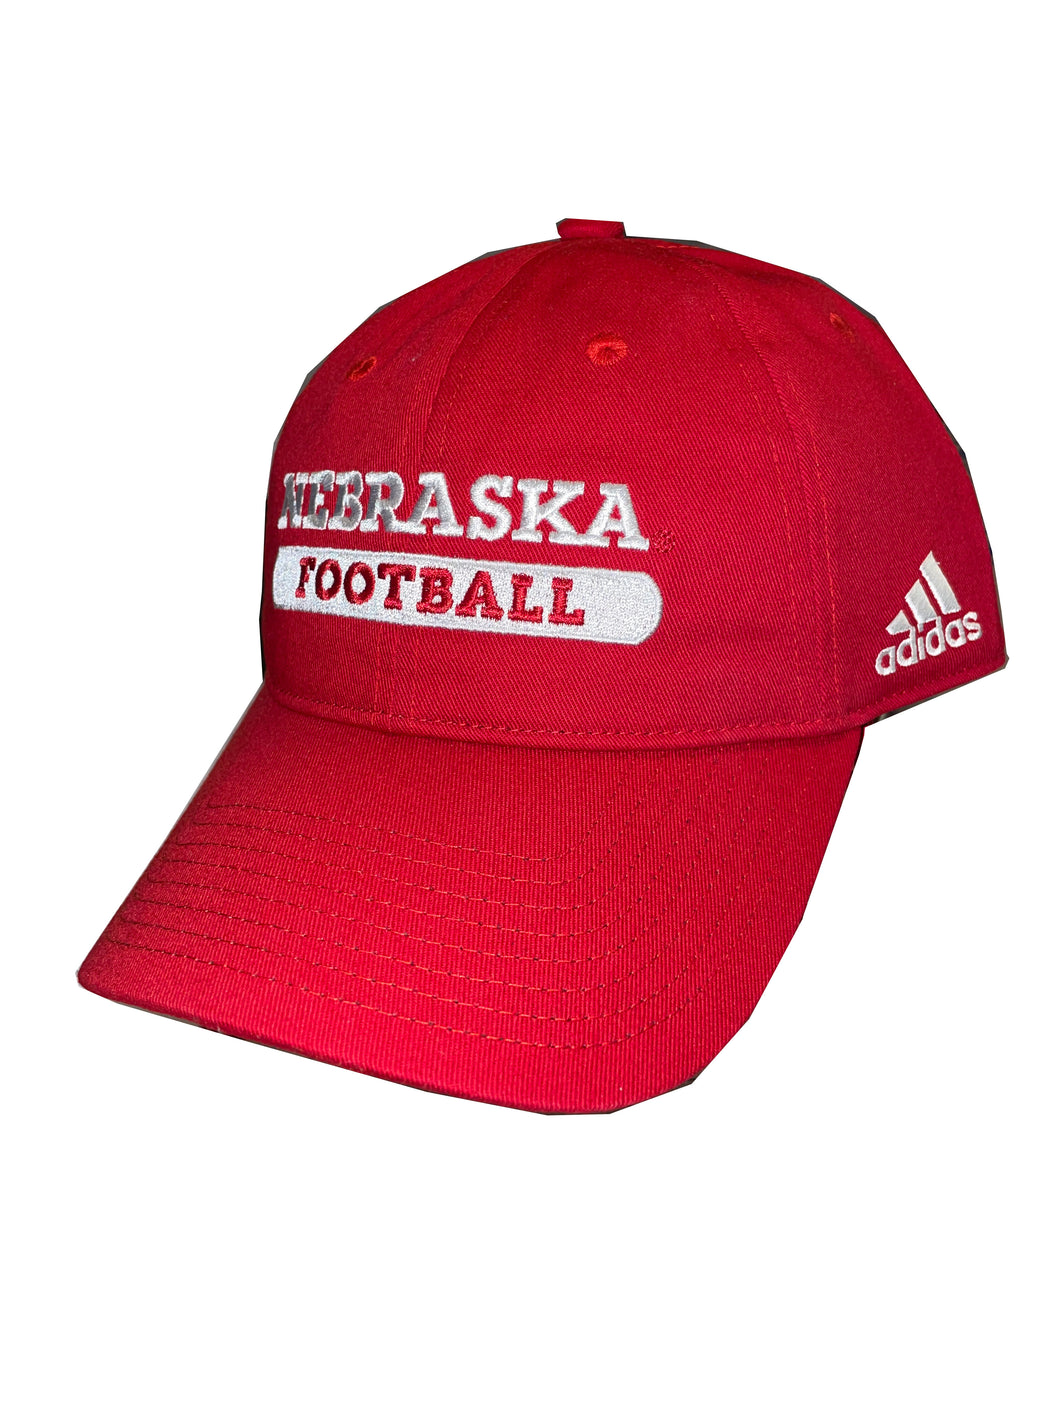 Nebraska Adidas Football hat-Adjustable-Red